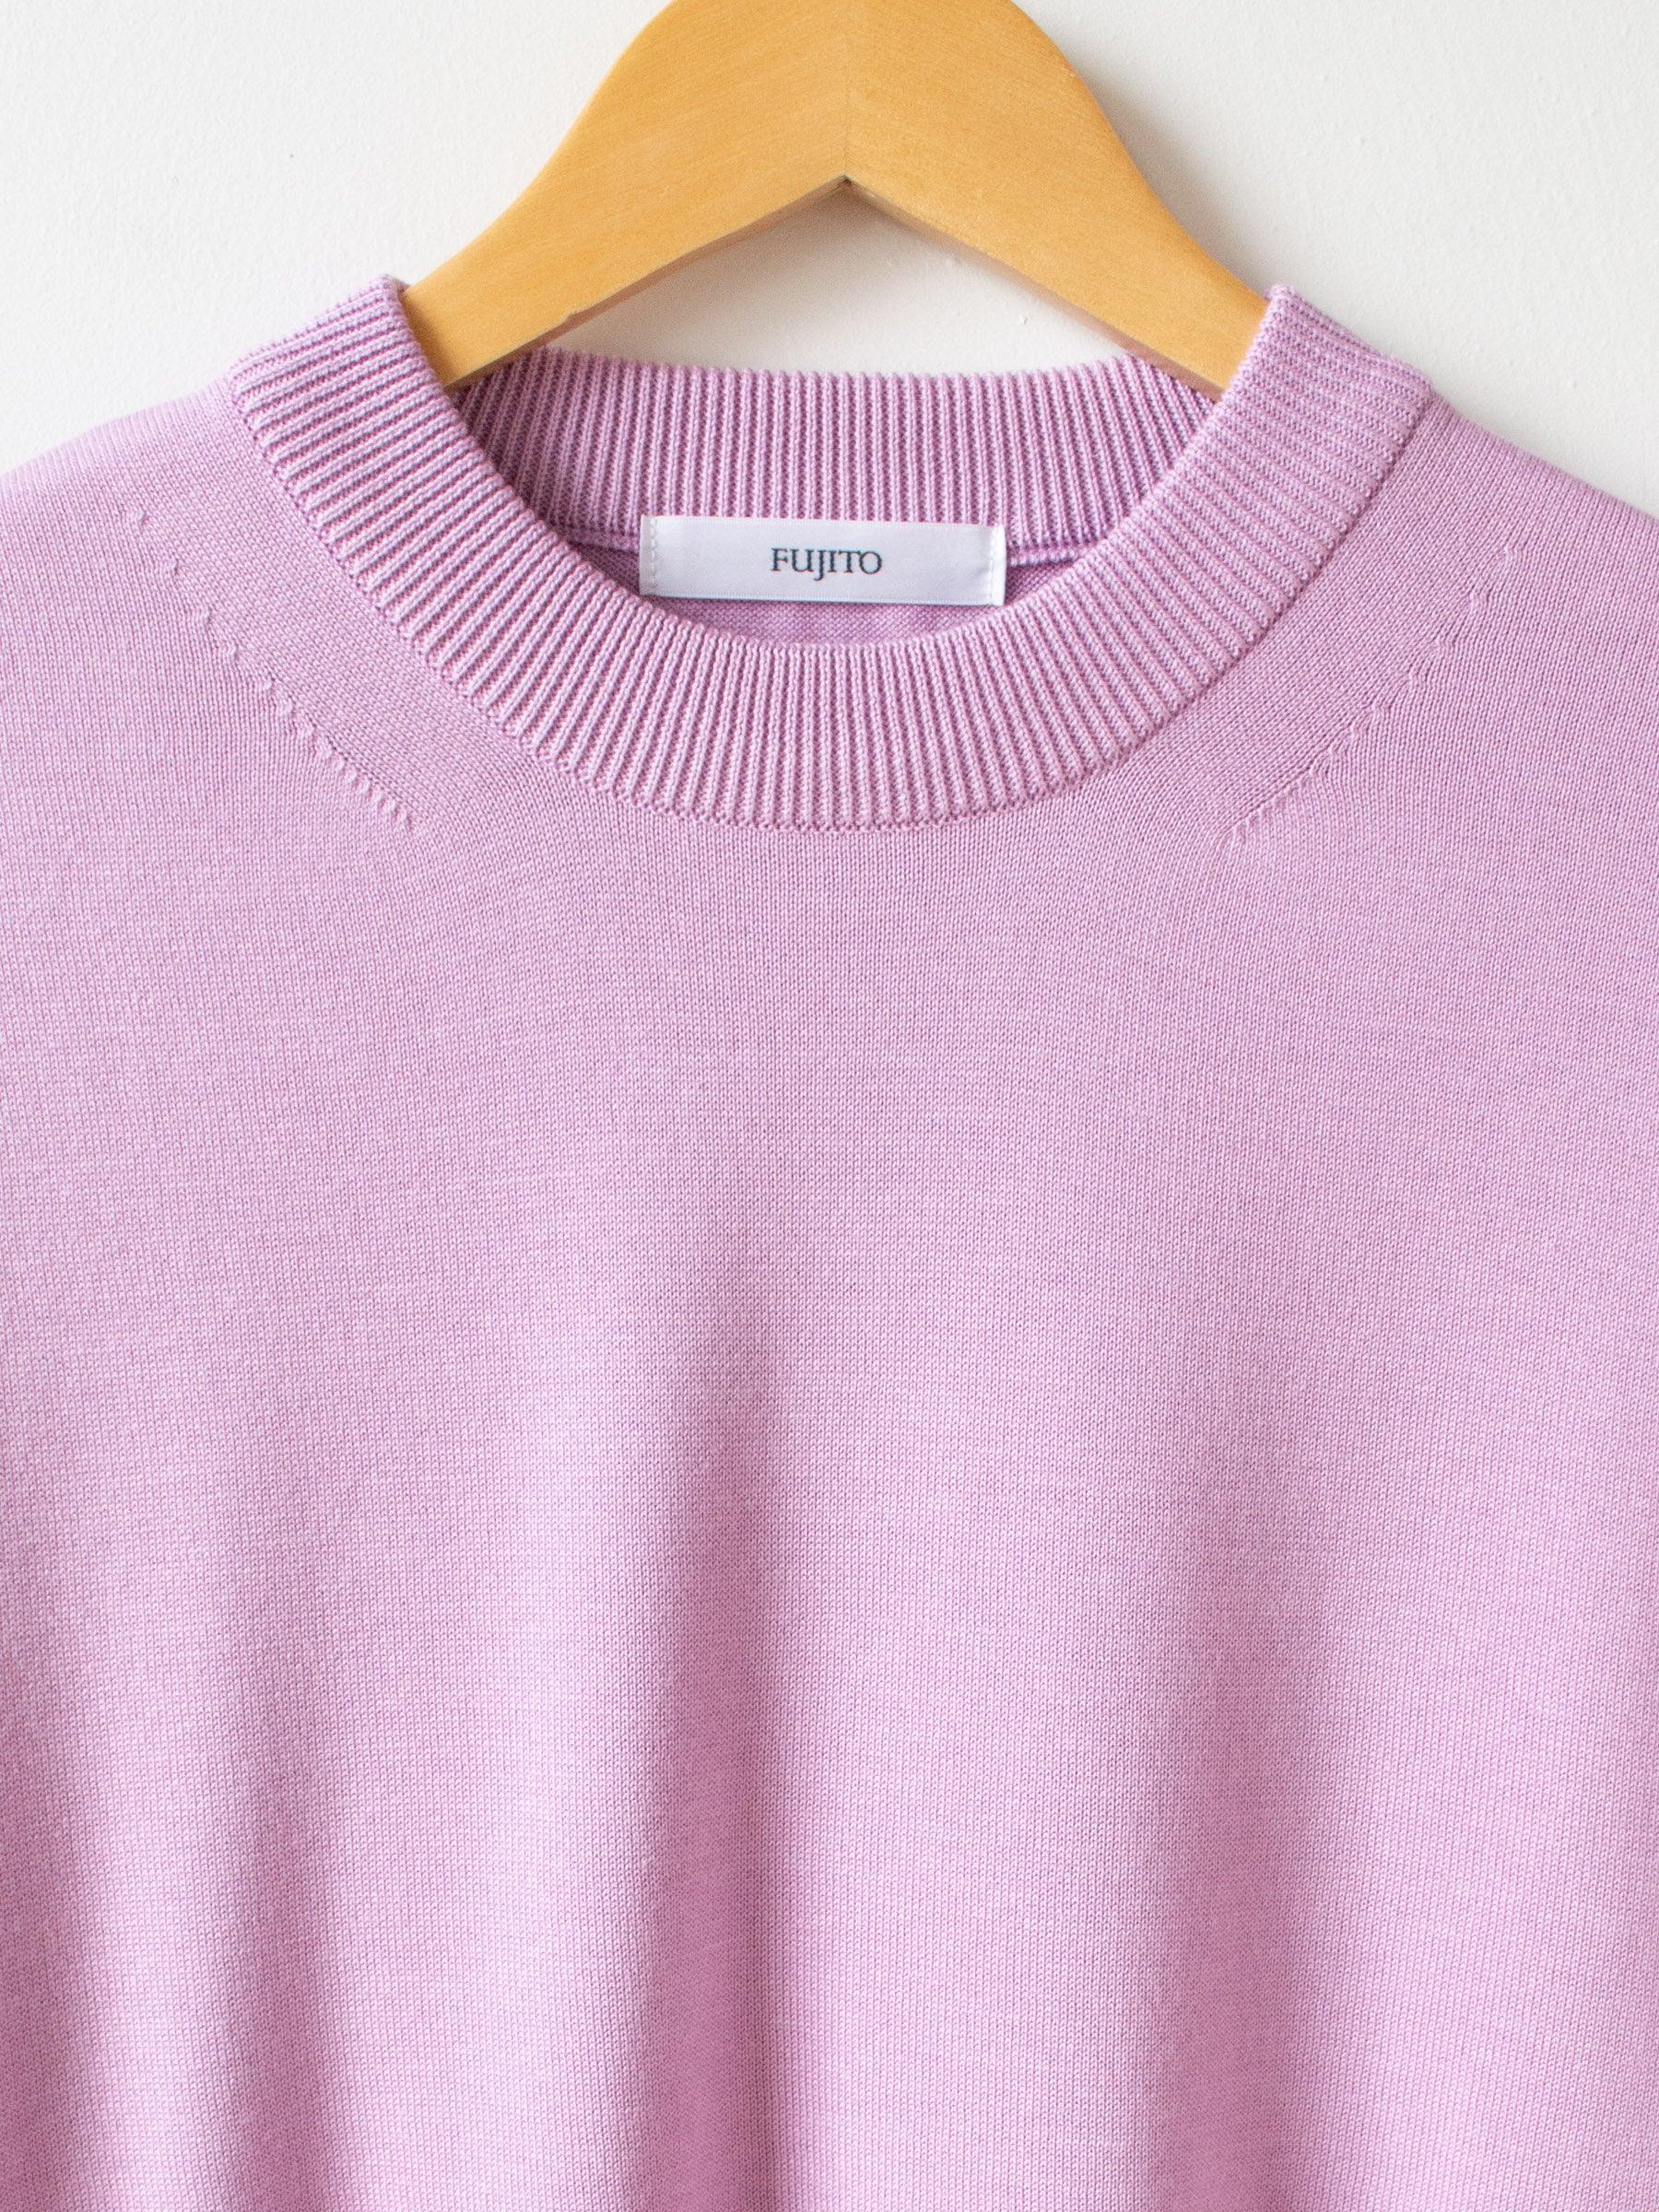 Namu Shop - Fujito Co Silk C/N Knit Sweater - Lavender